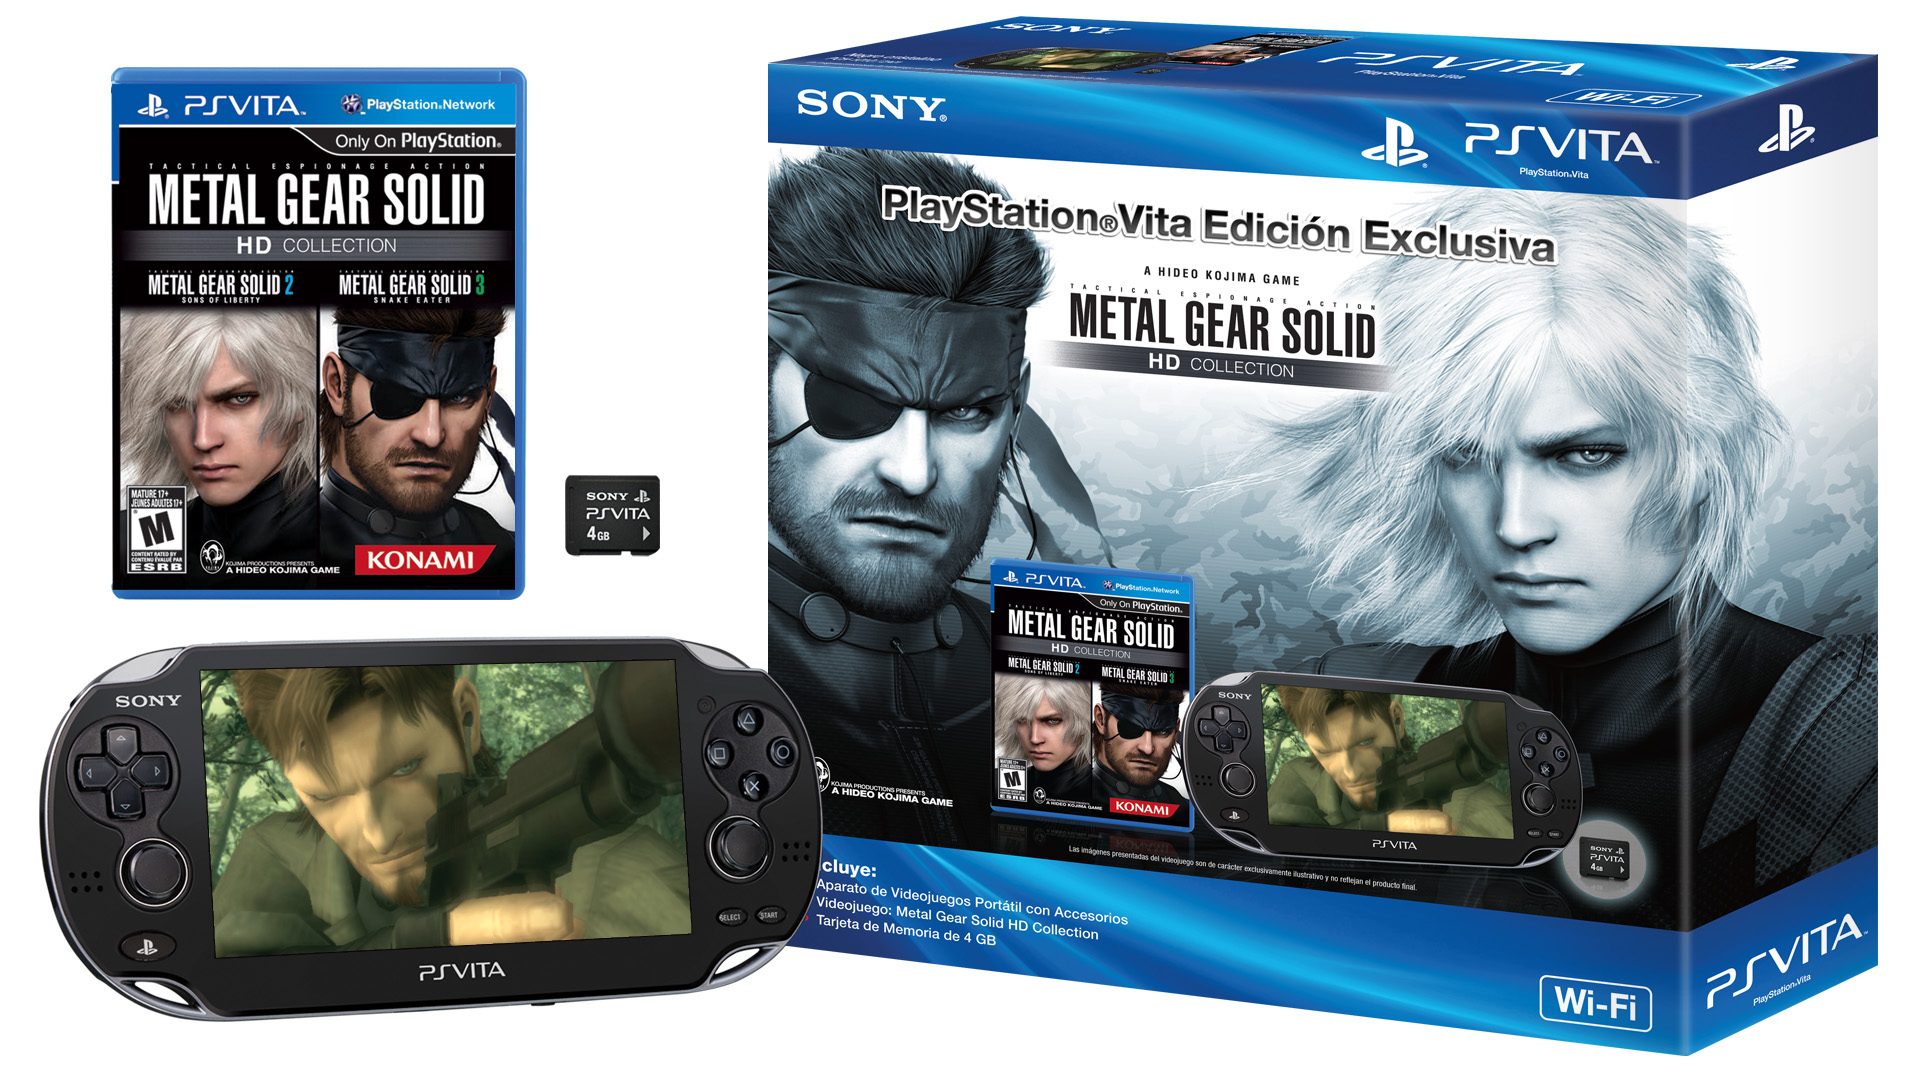 Ps vita collection. MGS 2 PS Vita. MGS 3 PS Vita. PS Vita Edition Metal Gear Solid 2. Metal Gear Solid 3 PS Vita.